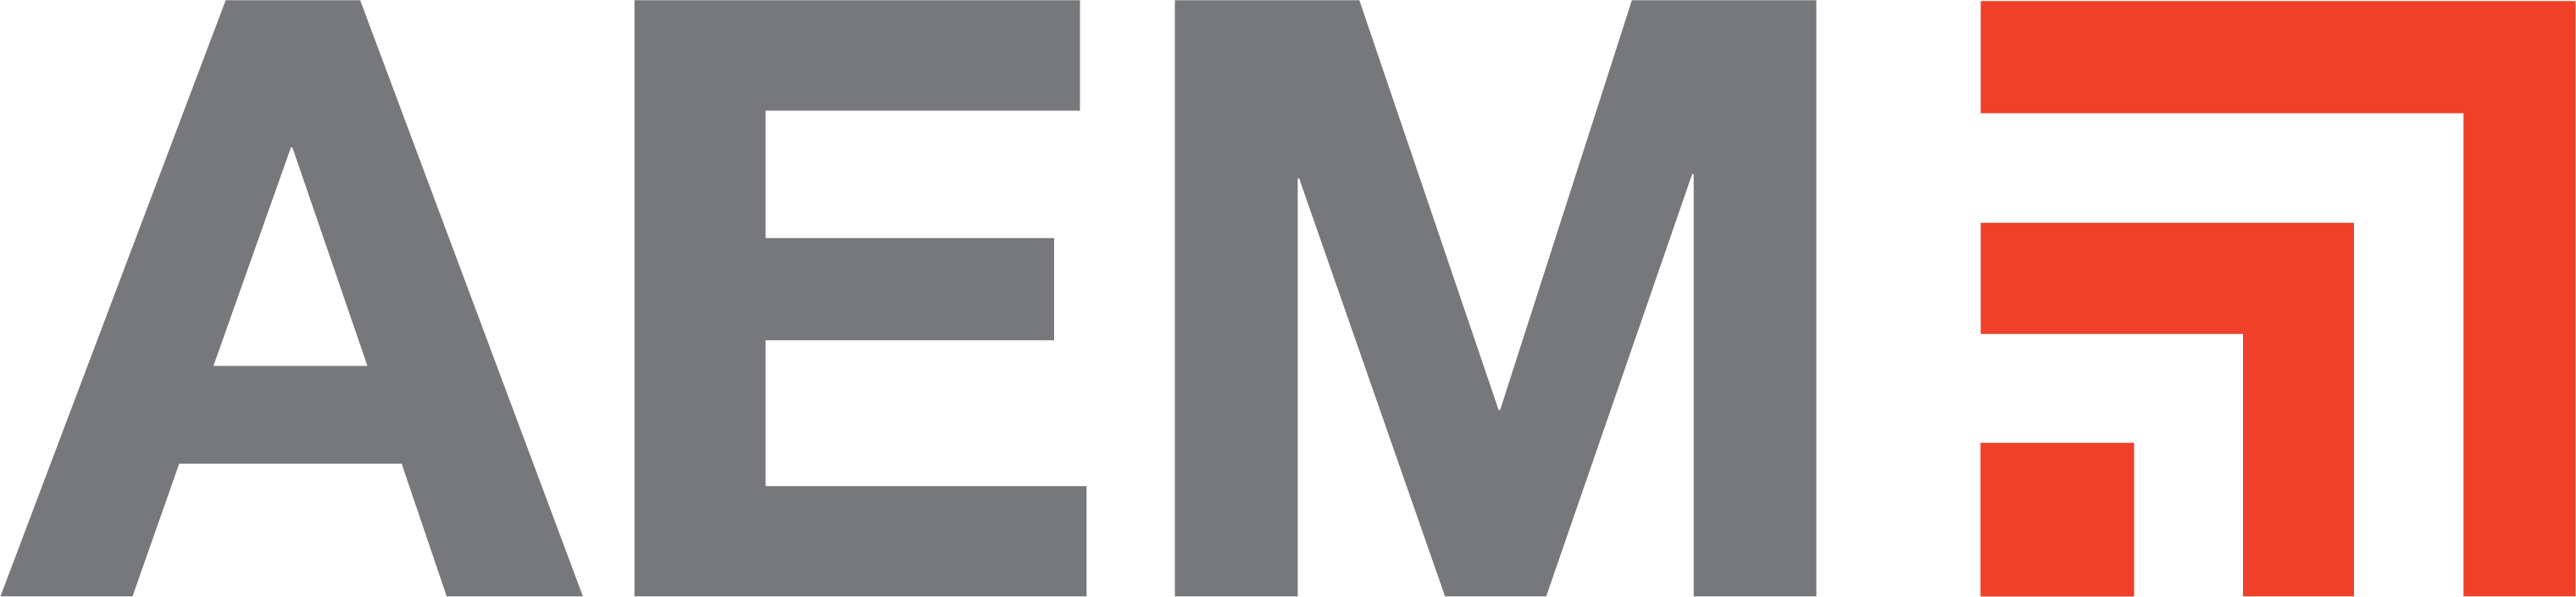 Association of Equipment Manufacturers Company Logo